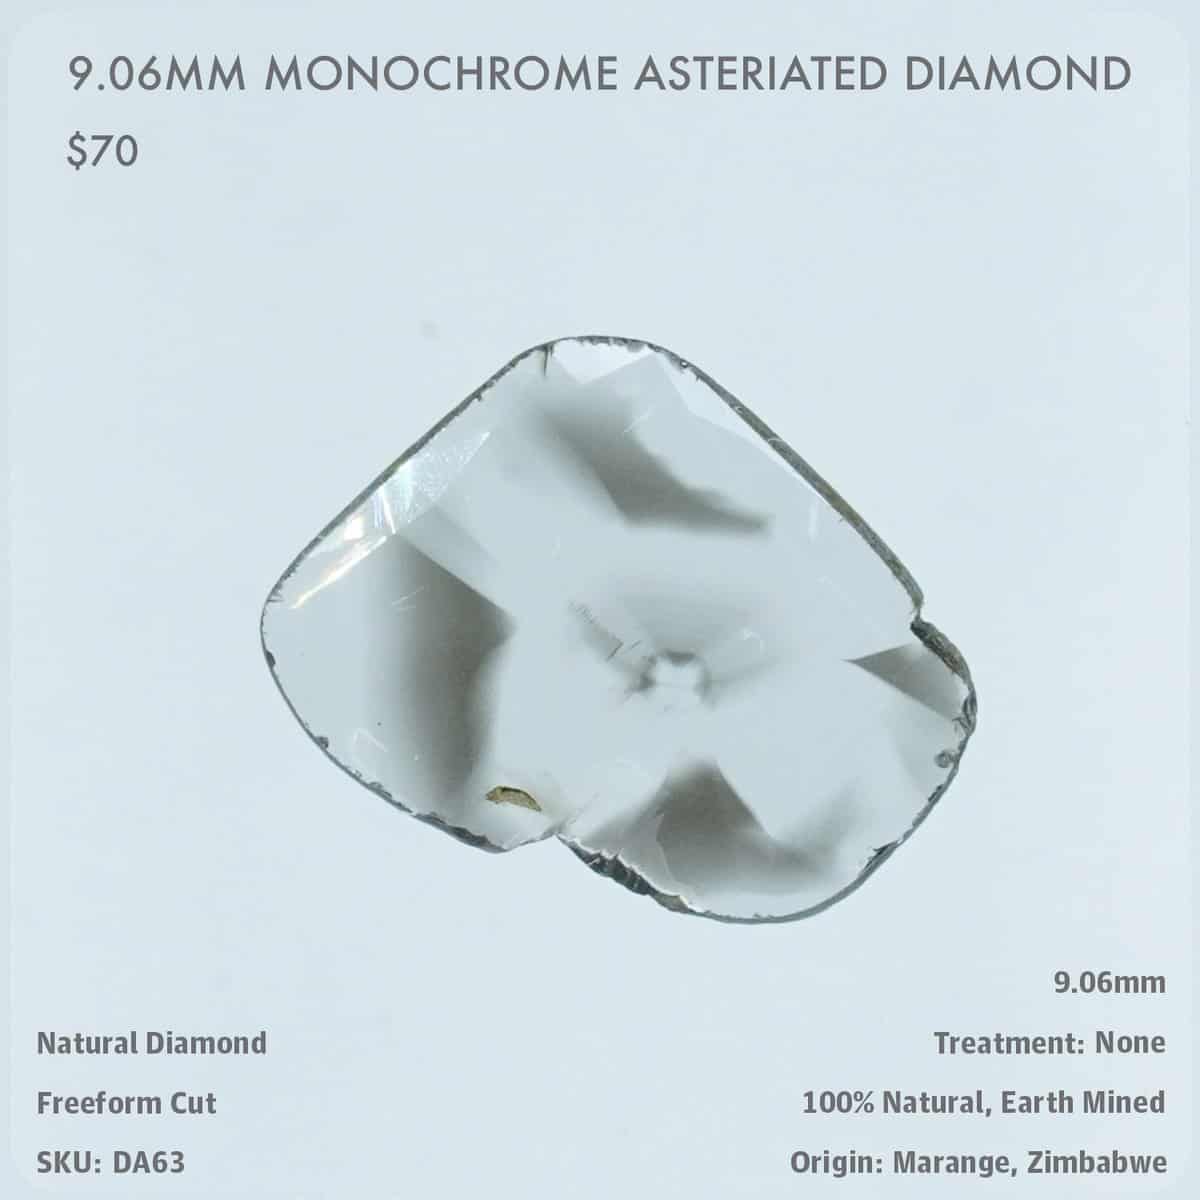 9.06mm Monochrome Asteriated Diamond